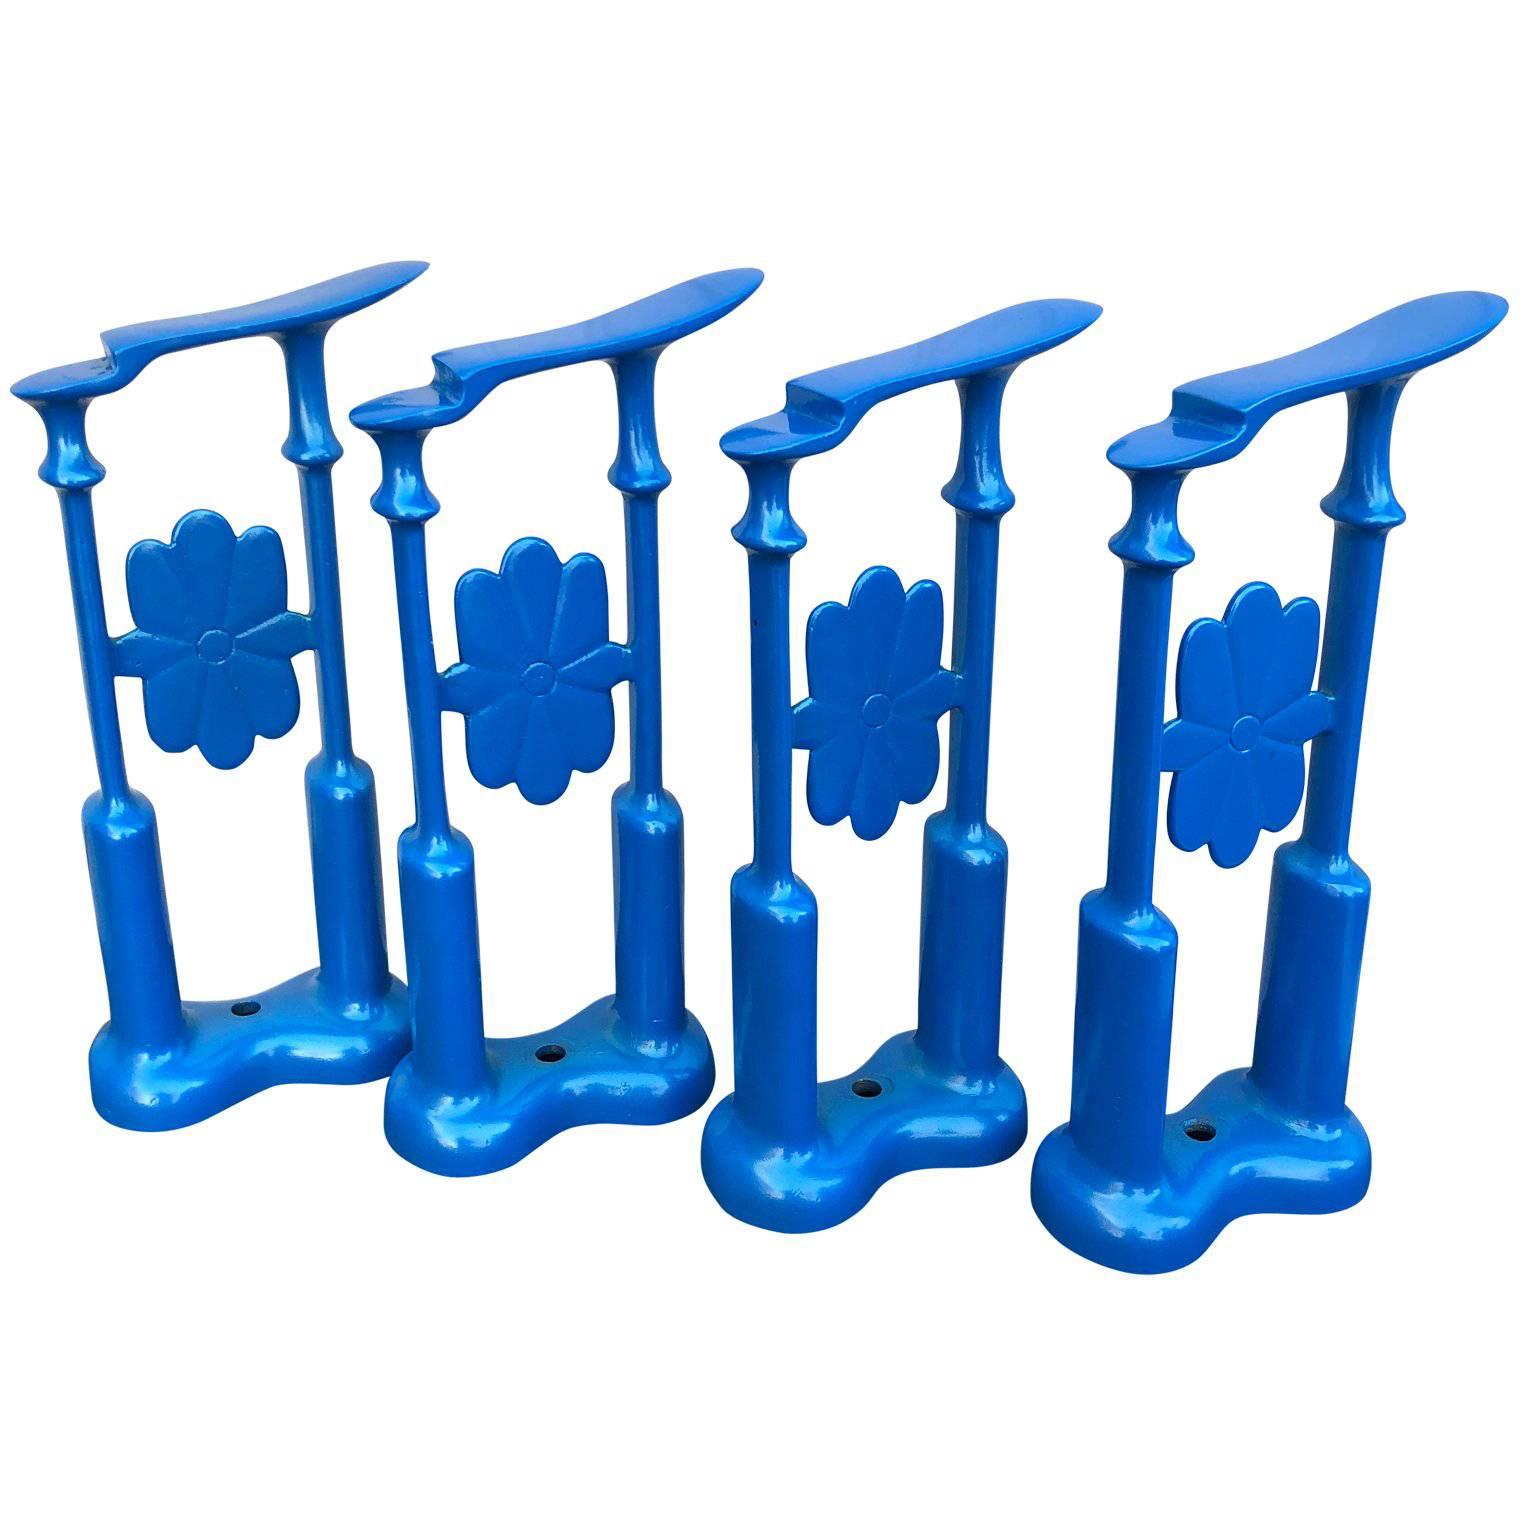 Set Of Four Decorative Blue Powder-Coated Cast Iron Shoe-Shine Stands